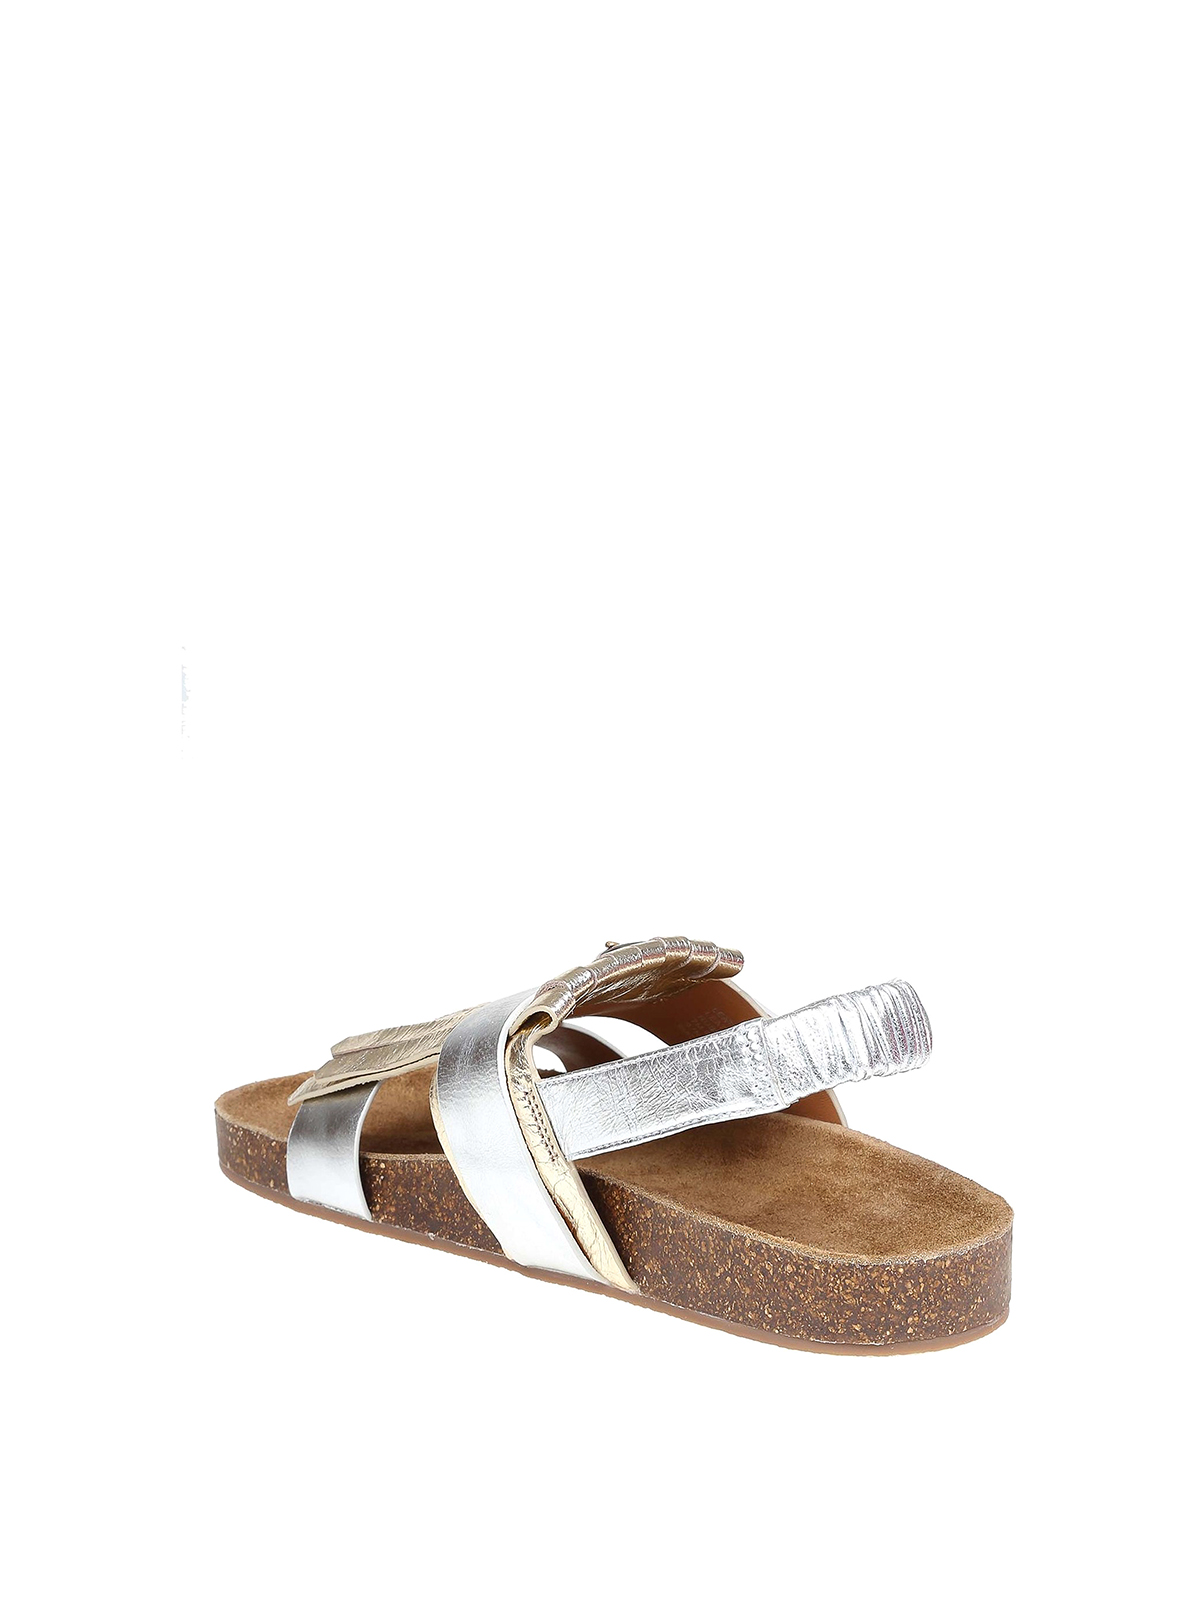 Sandals Tory Burch - Kiltie sandals - 89000020 | Shop online at iKRIX